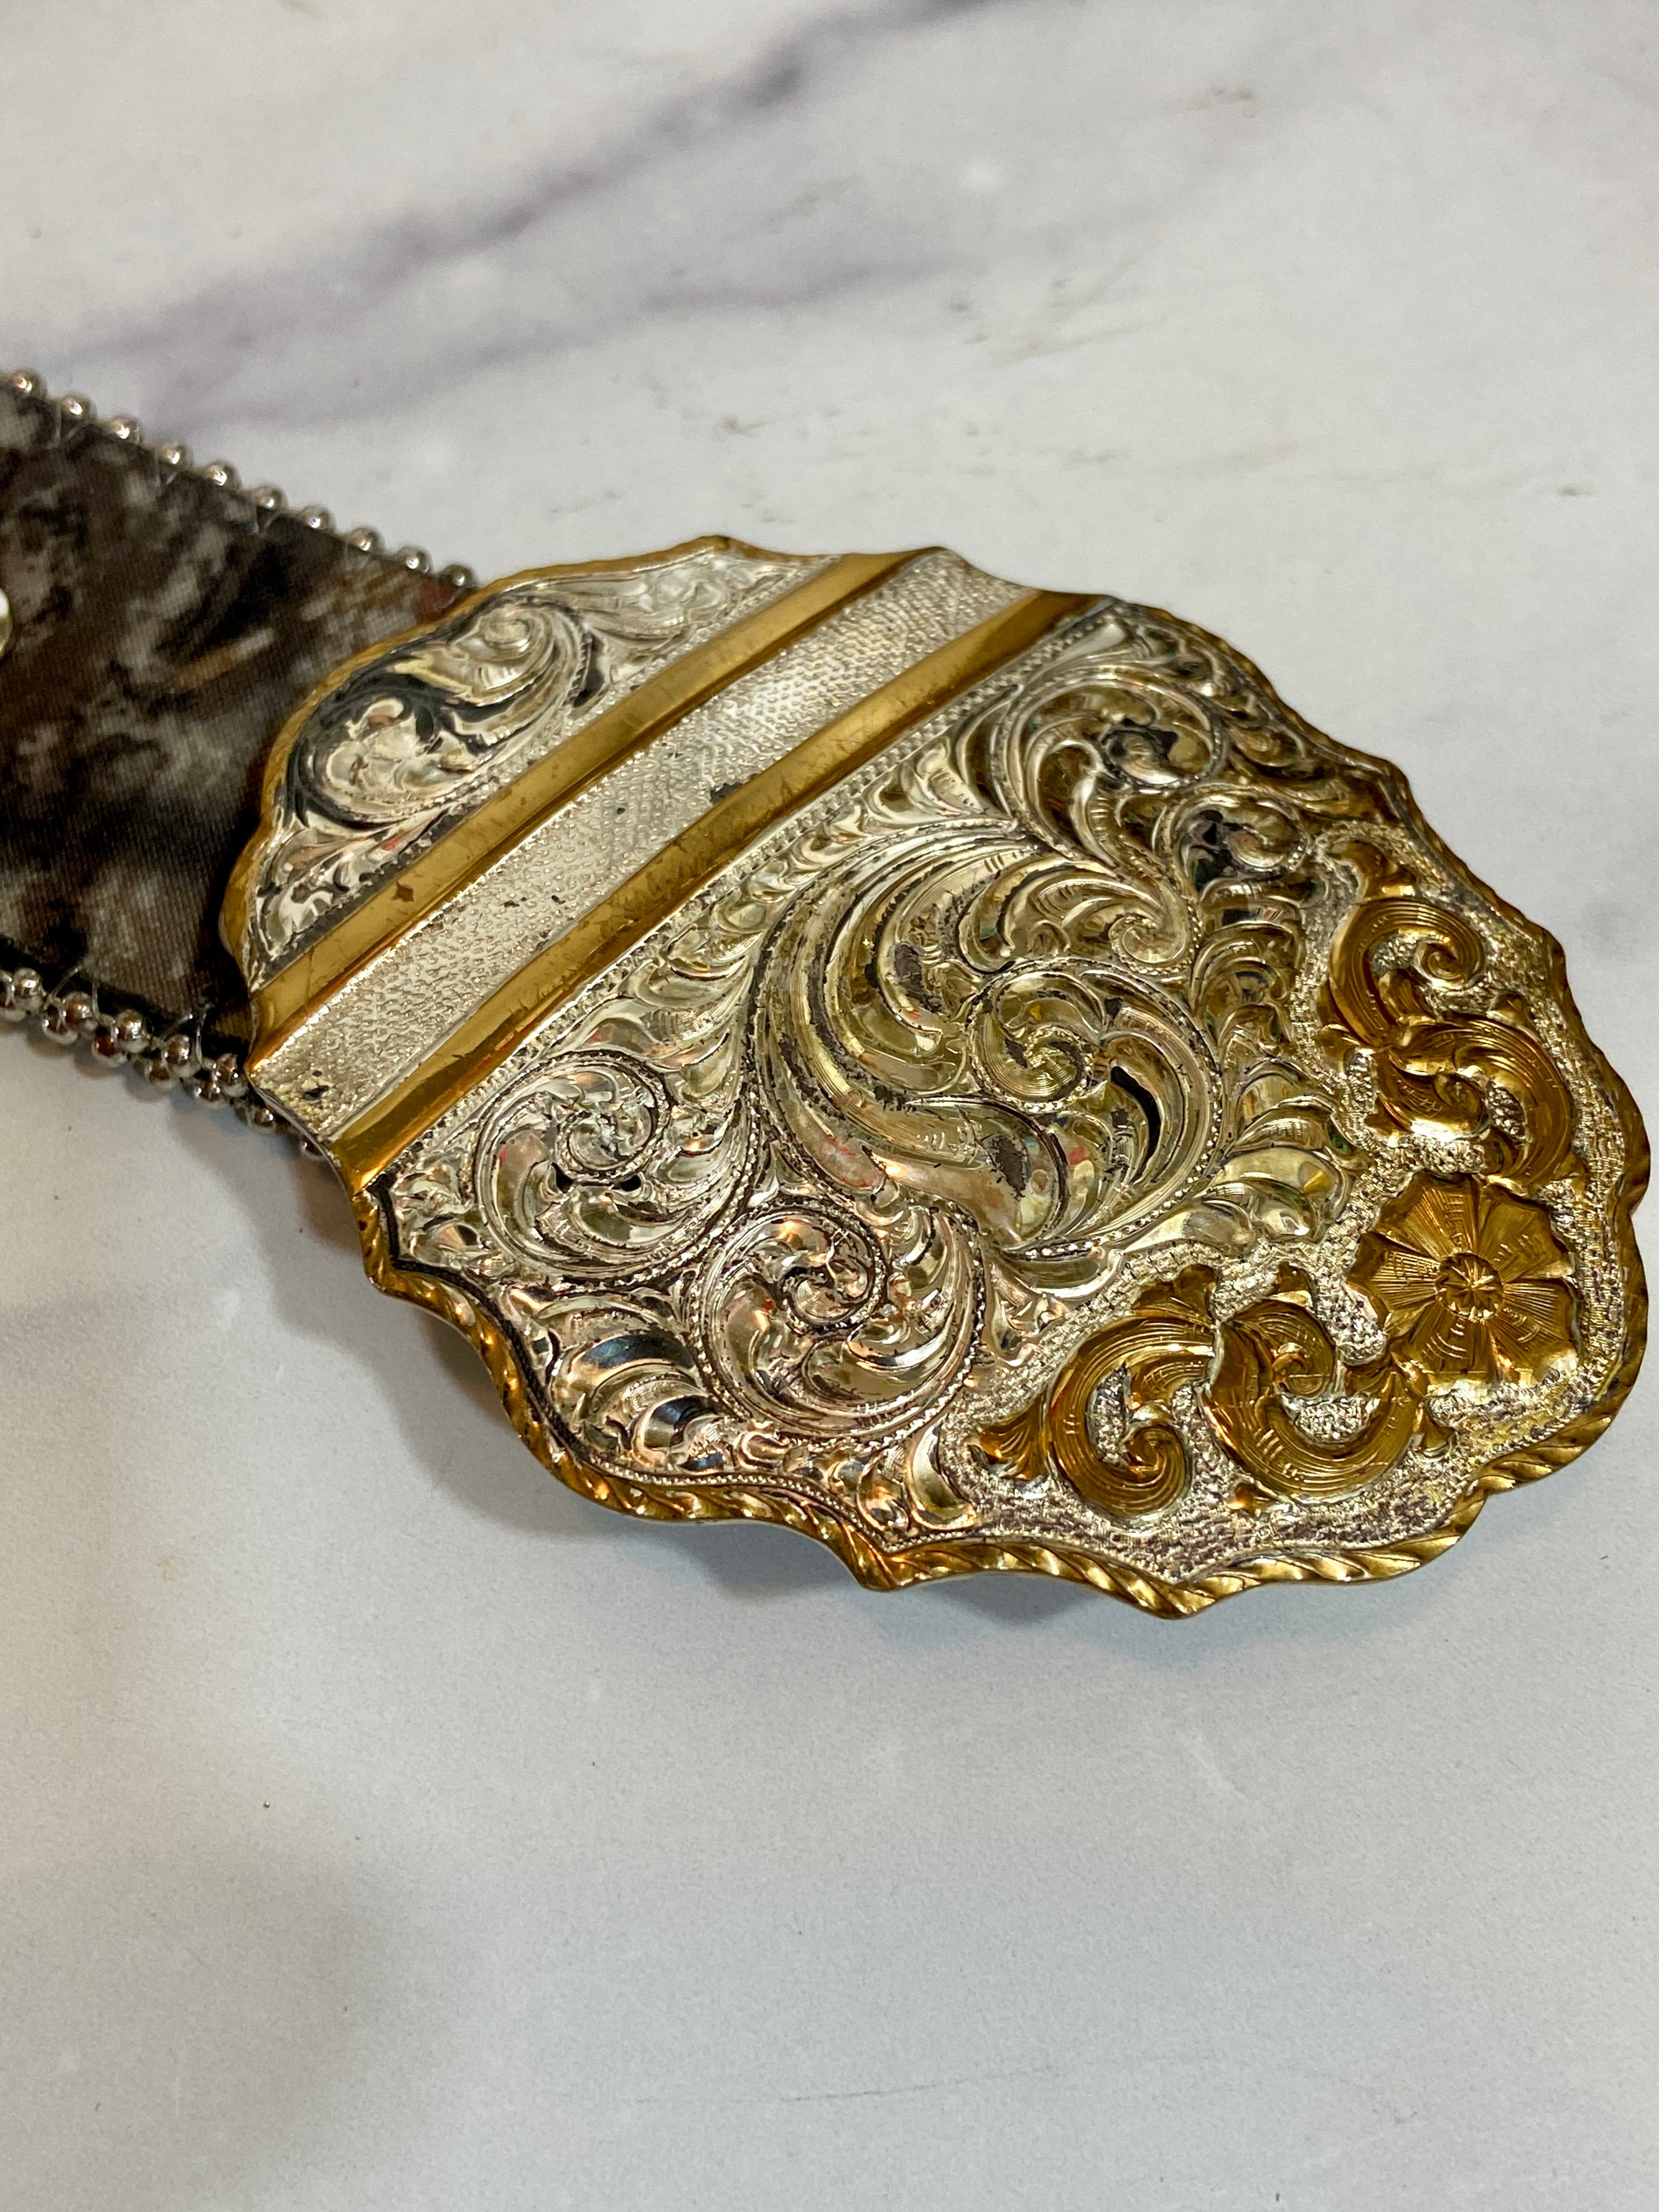 Heavy silver plate in a beautiful leather belt